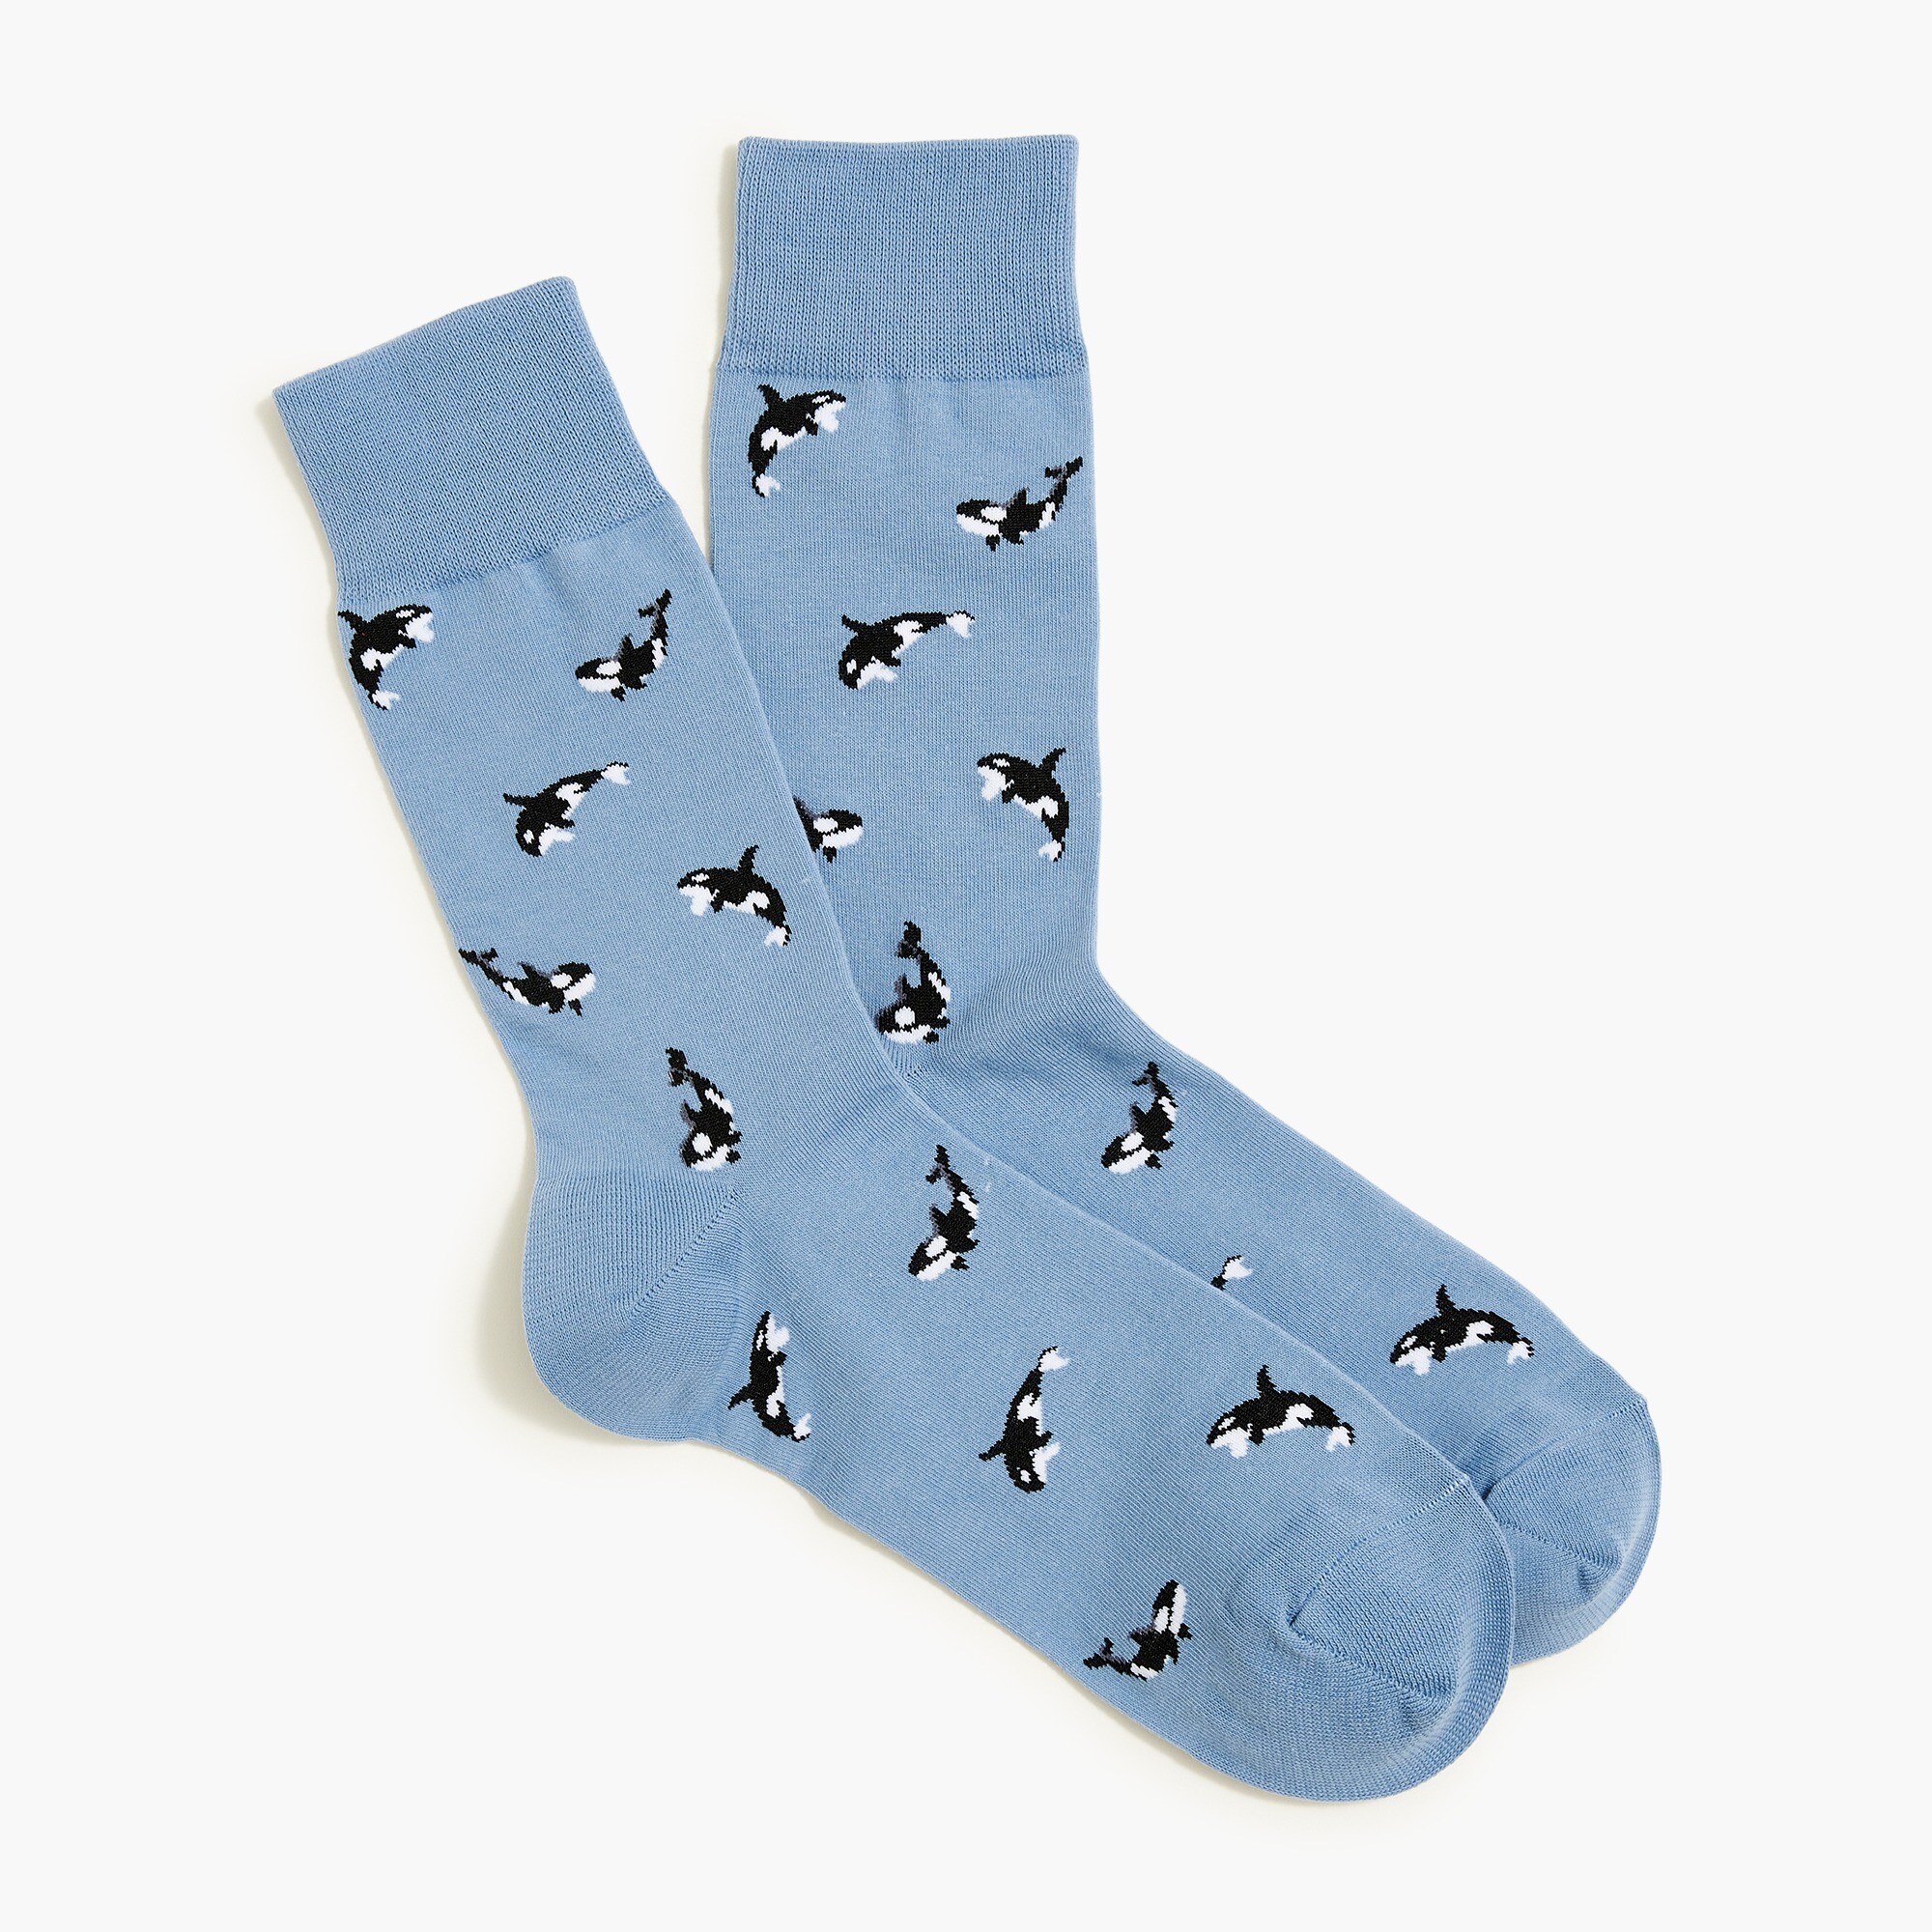 mens Orca whale socks